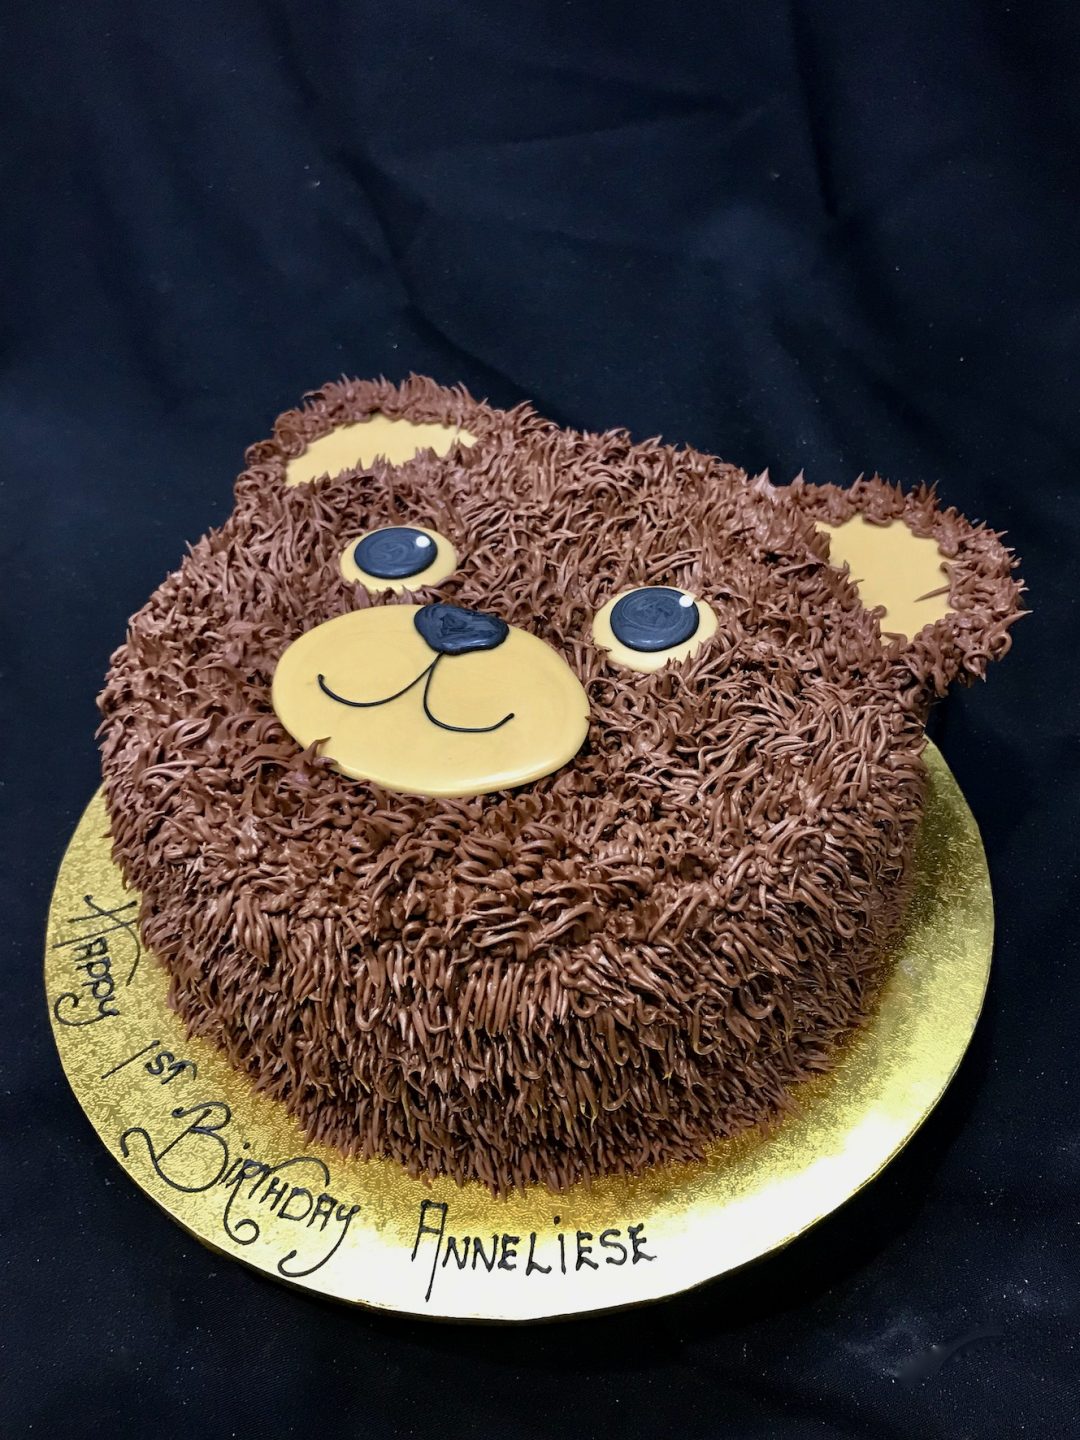 Care Bears Cake – The Cake Shop